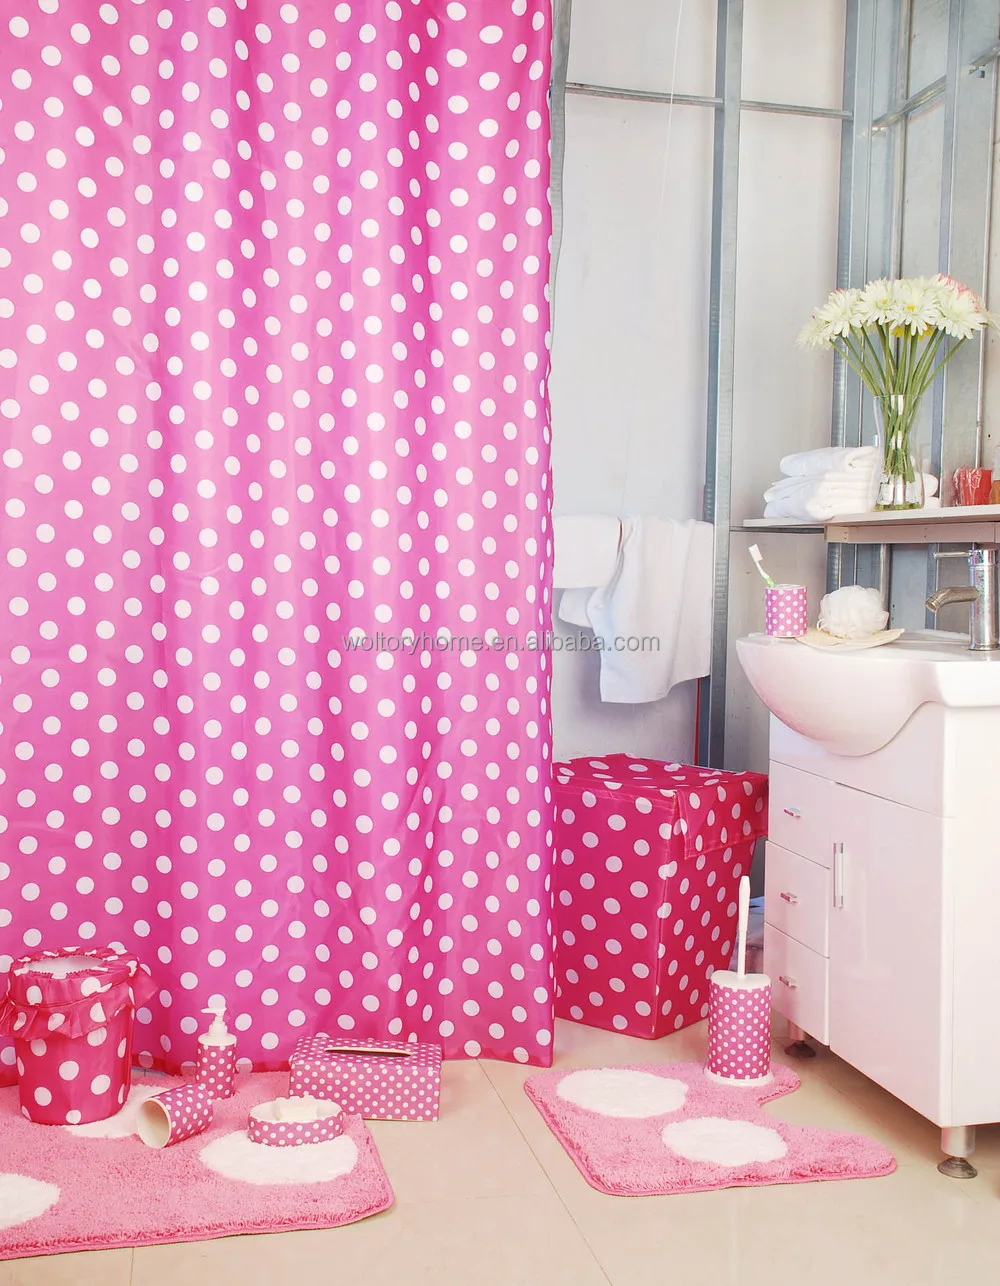 Set 4 Piece Pink/Green Polka Dot Floral Pattern Ceramic Bathroom Accessories 